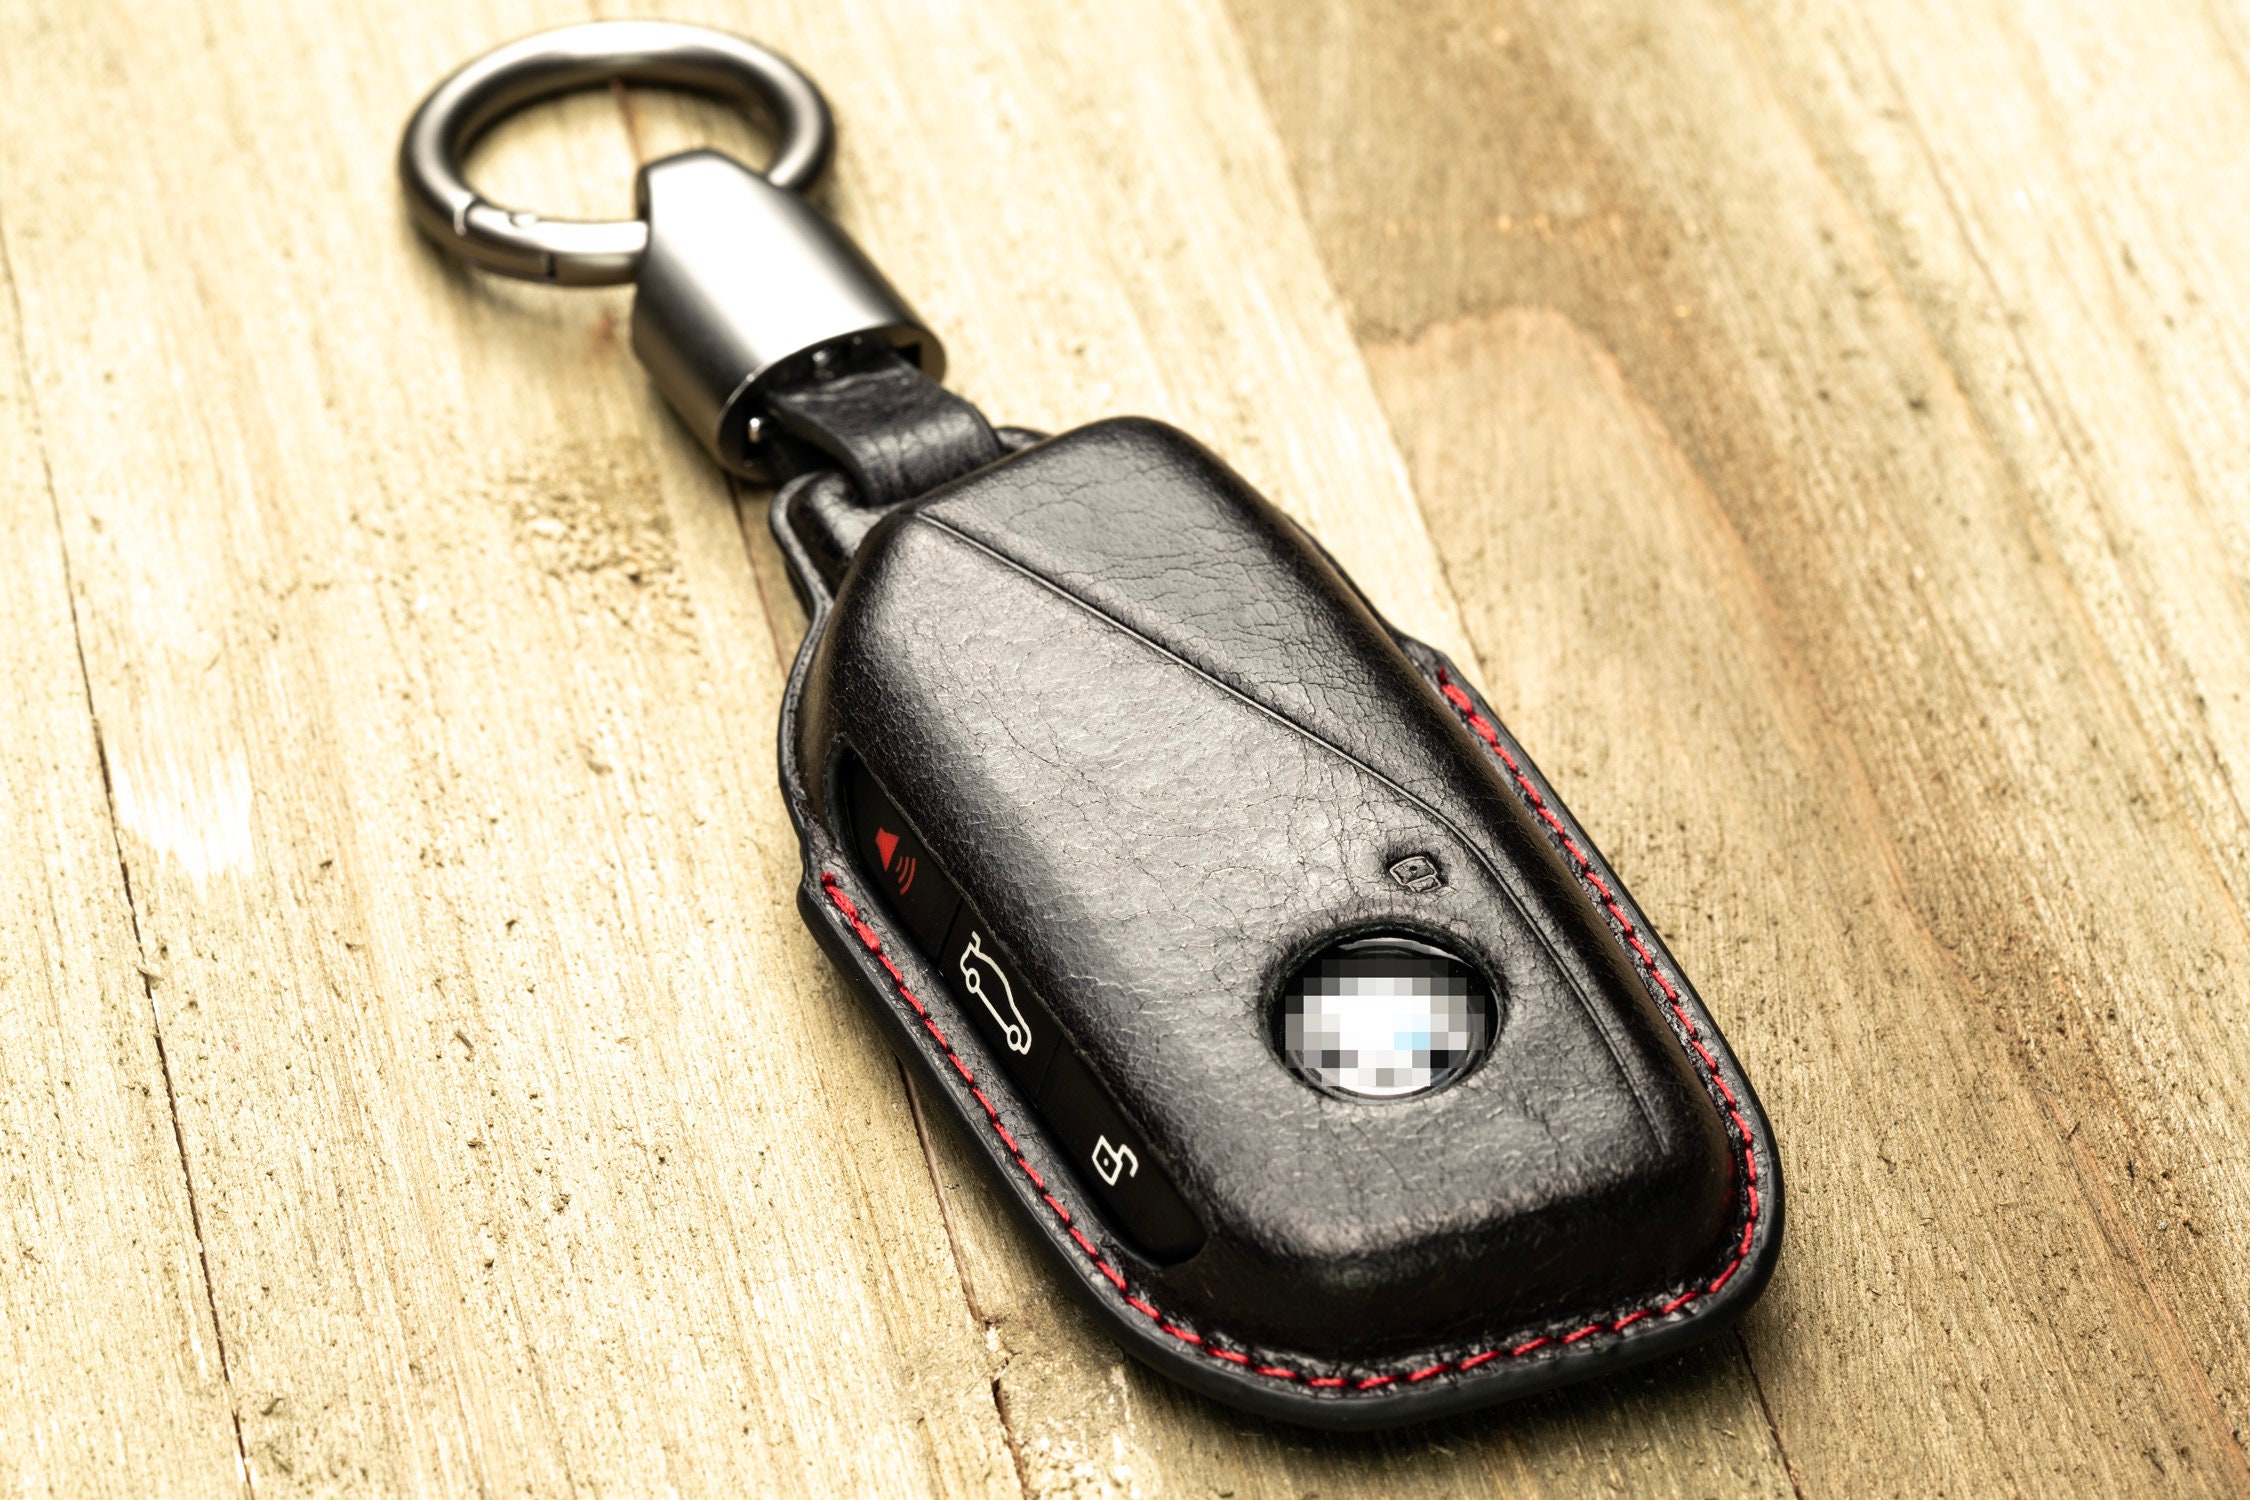 TPUCar Key Case Cover Fob Protector for BMW 320li X1 X3 X4x5 X6 530 Keychain  Holder Shell Skin - AliExpress